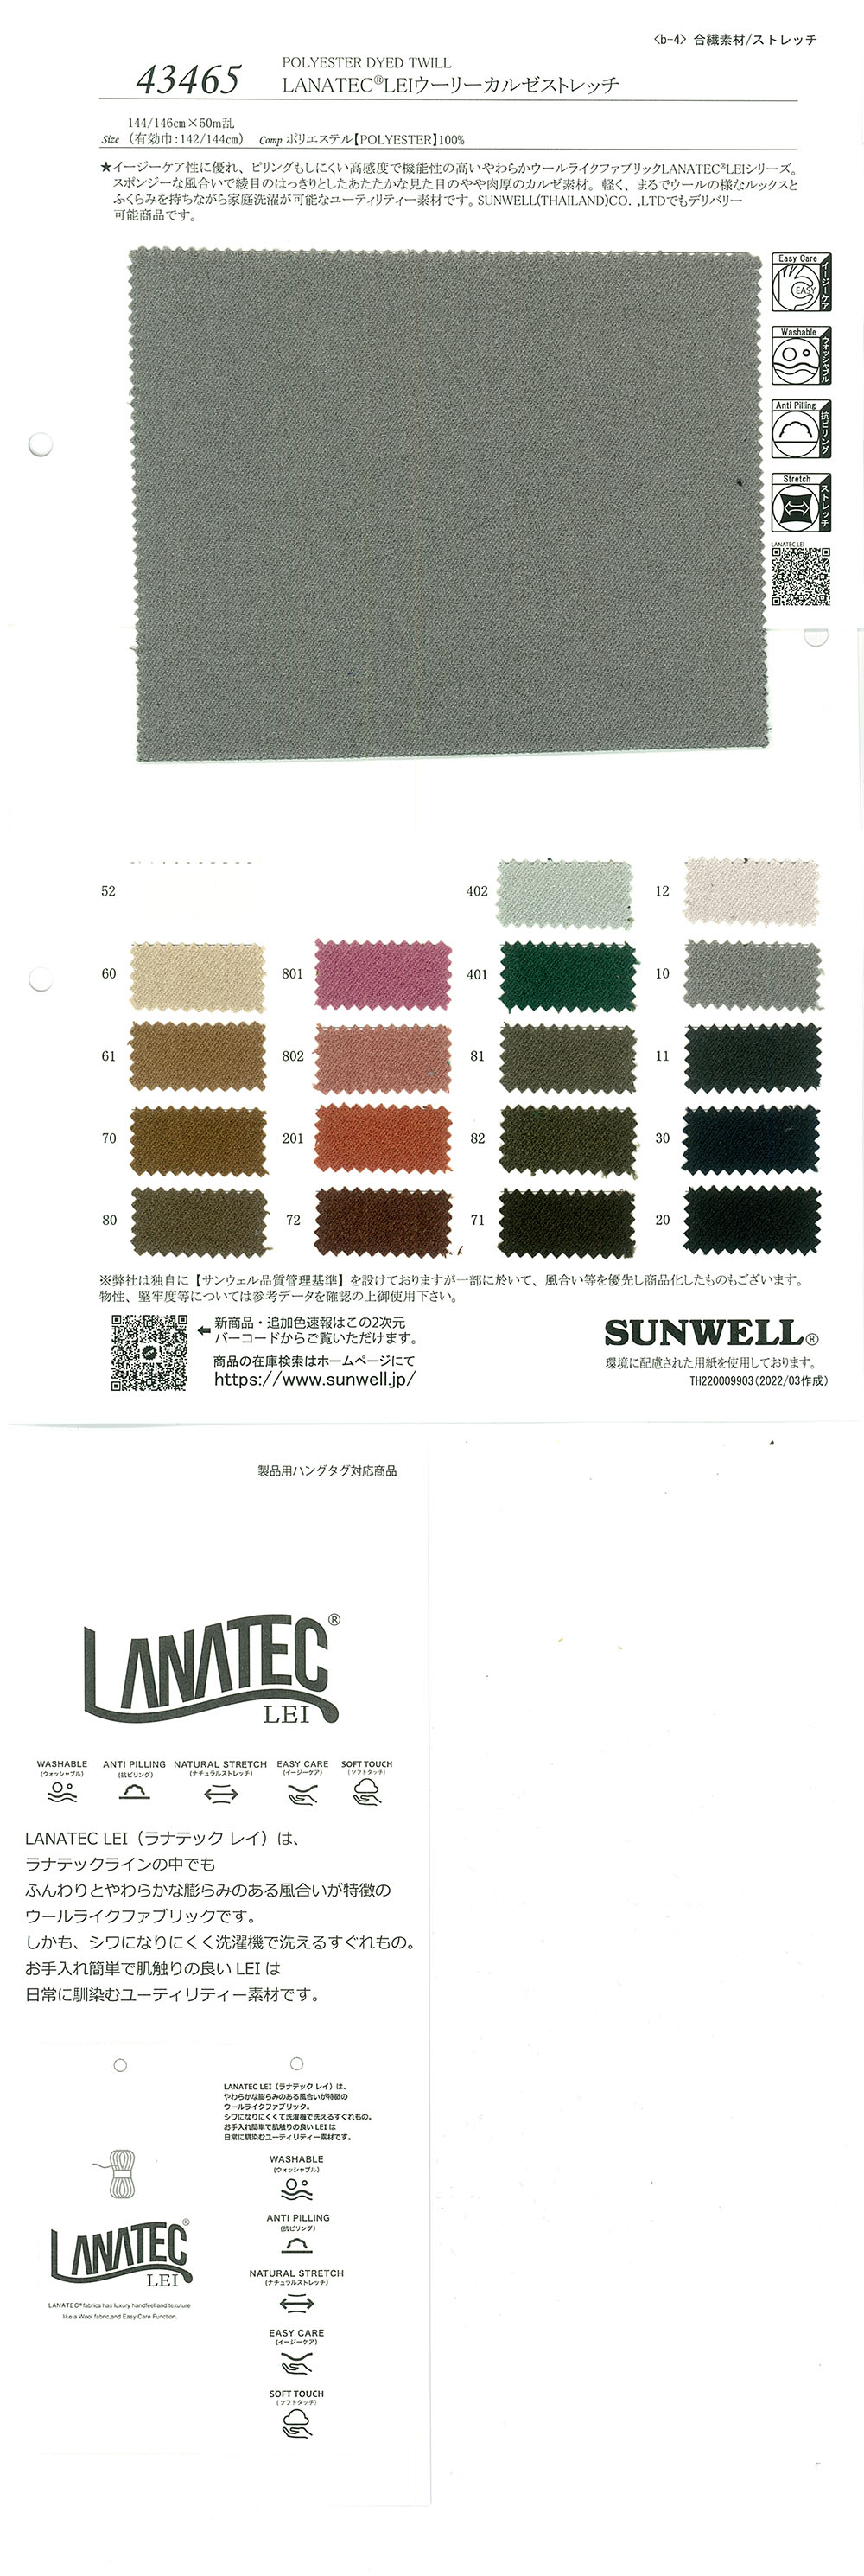 43465 LANATEC® LEI Woolly Kersey Stretch[Textilgewebe] SUNWELL